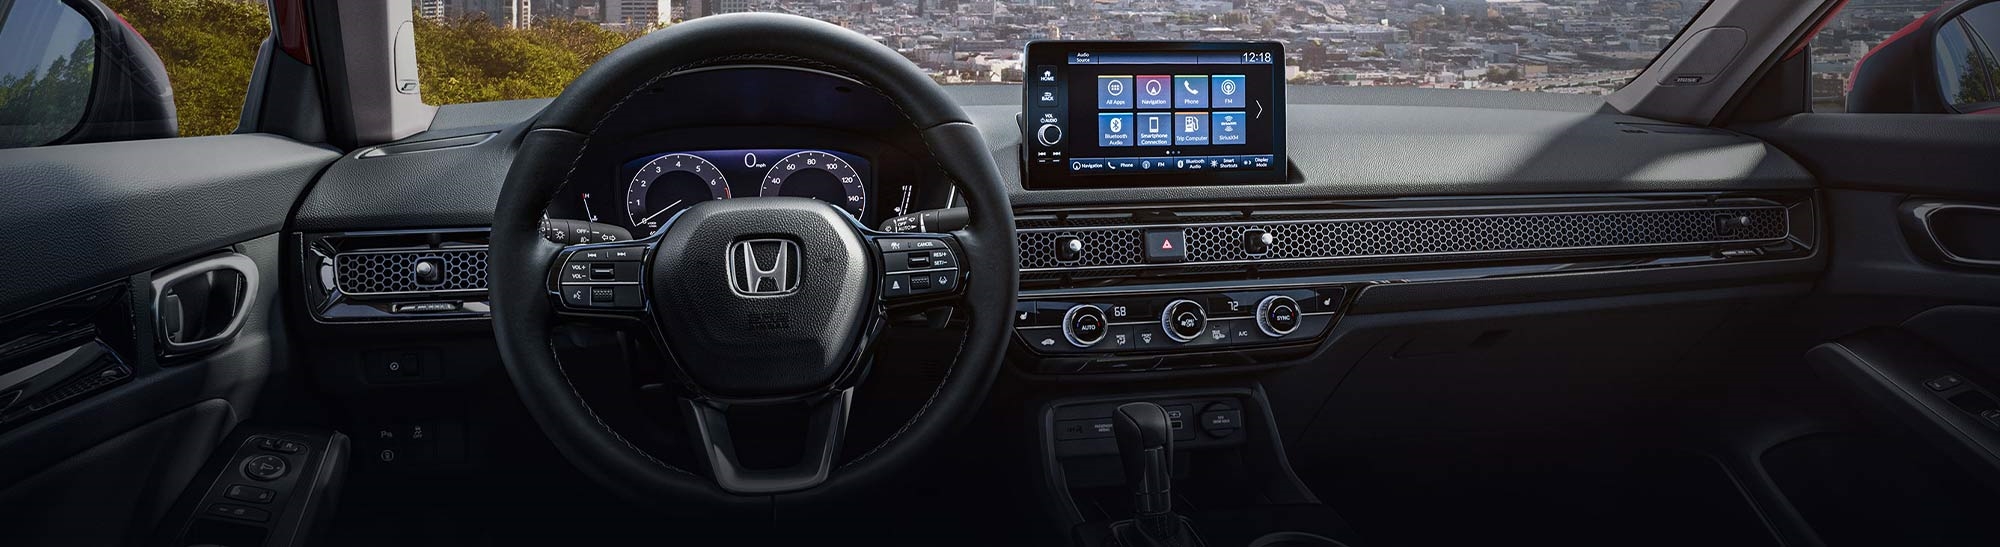 2022 Honda Civic Hatchback interior